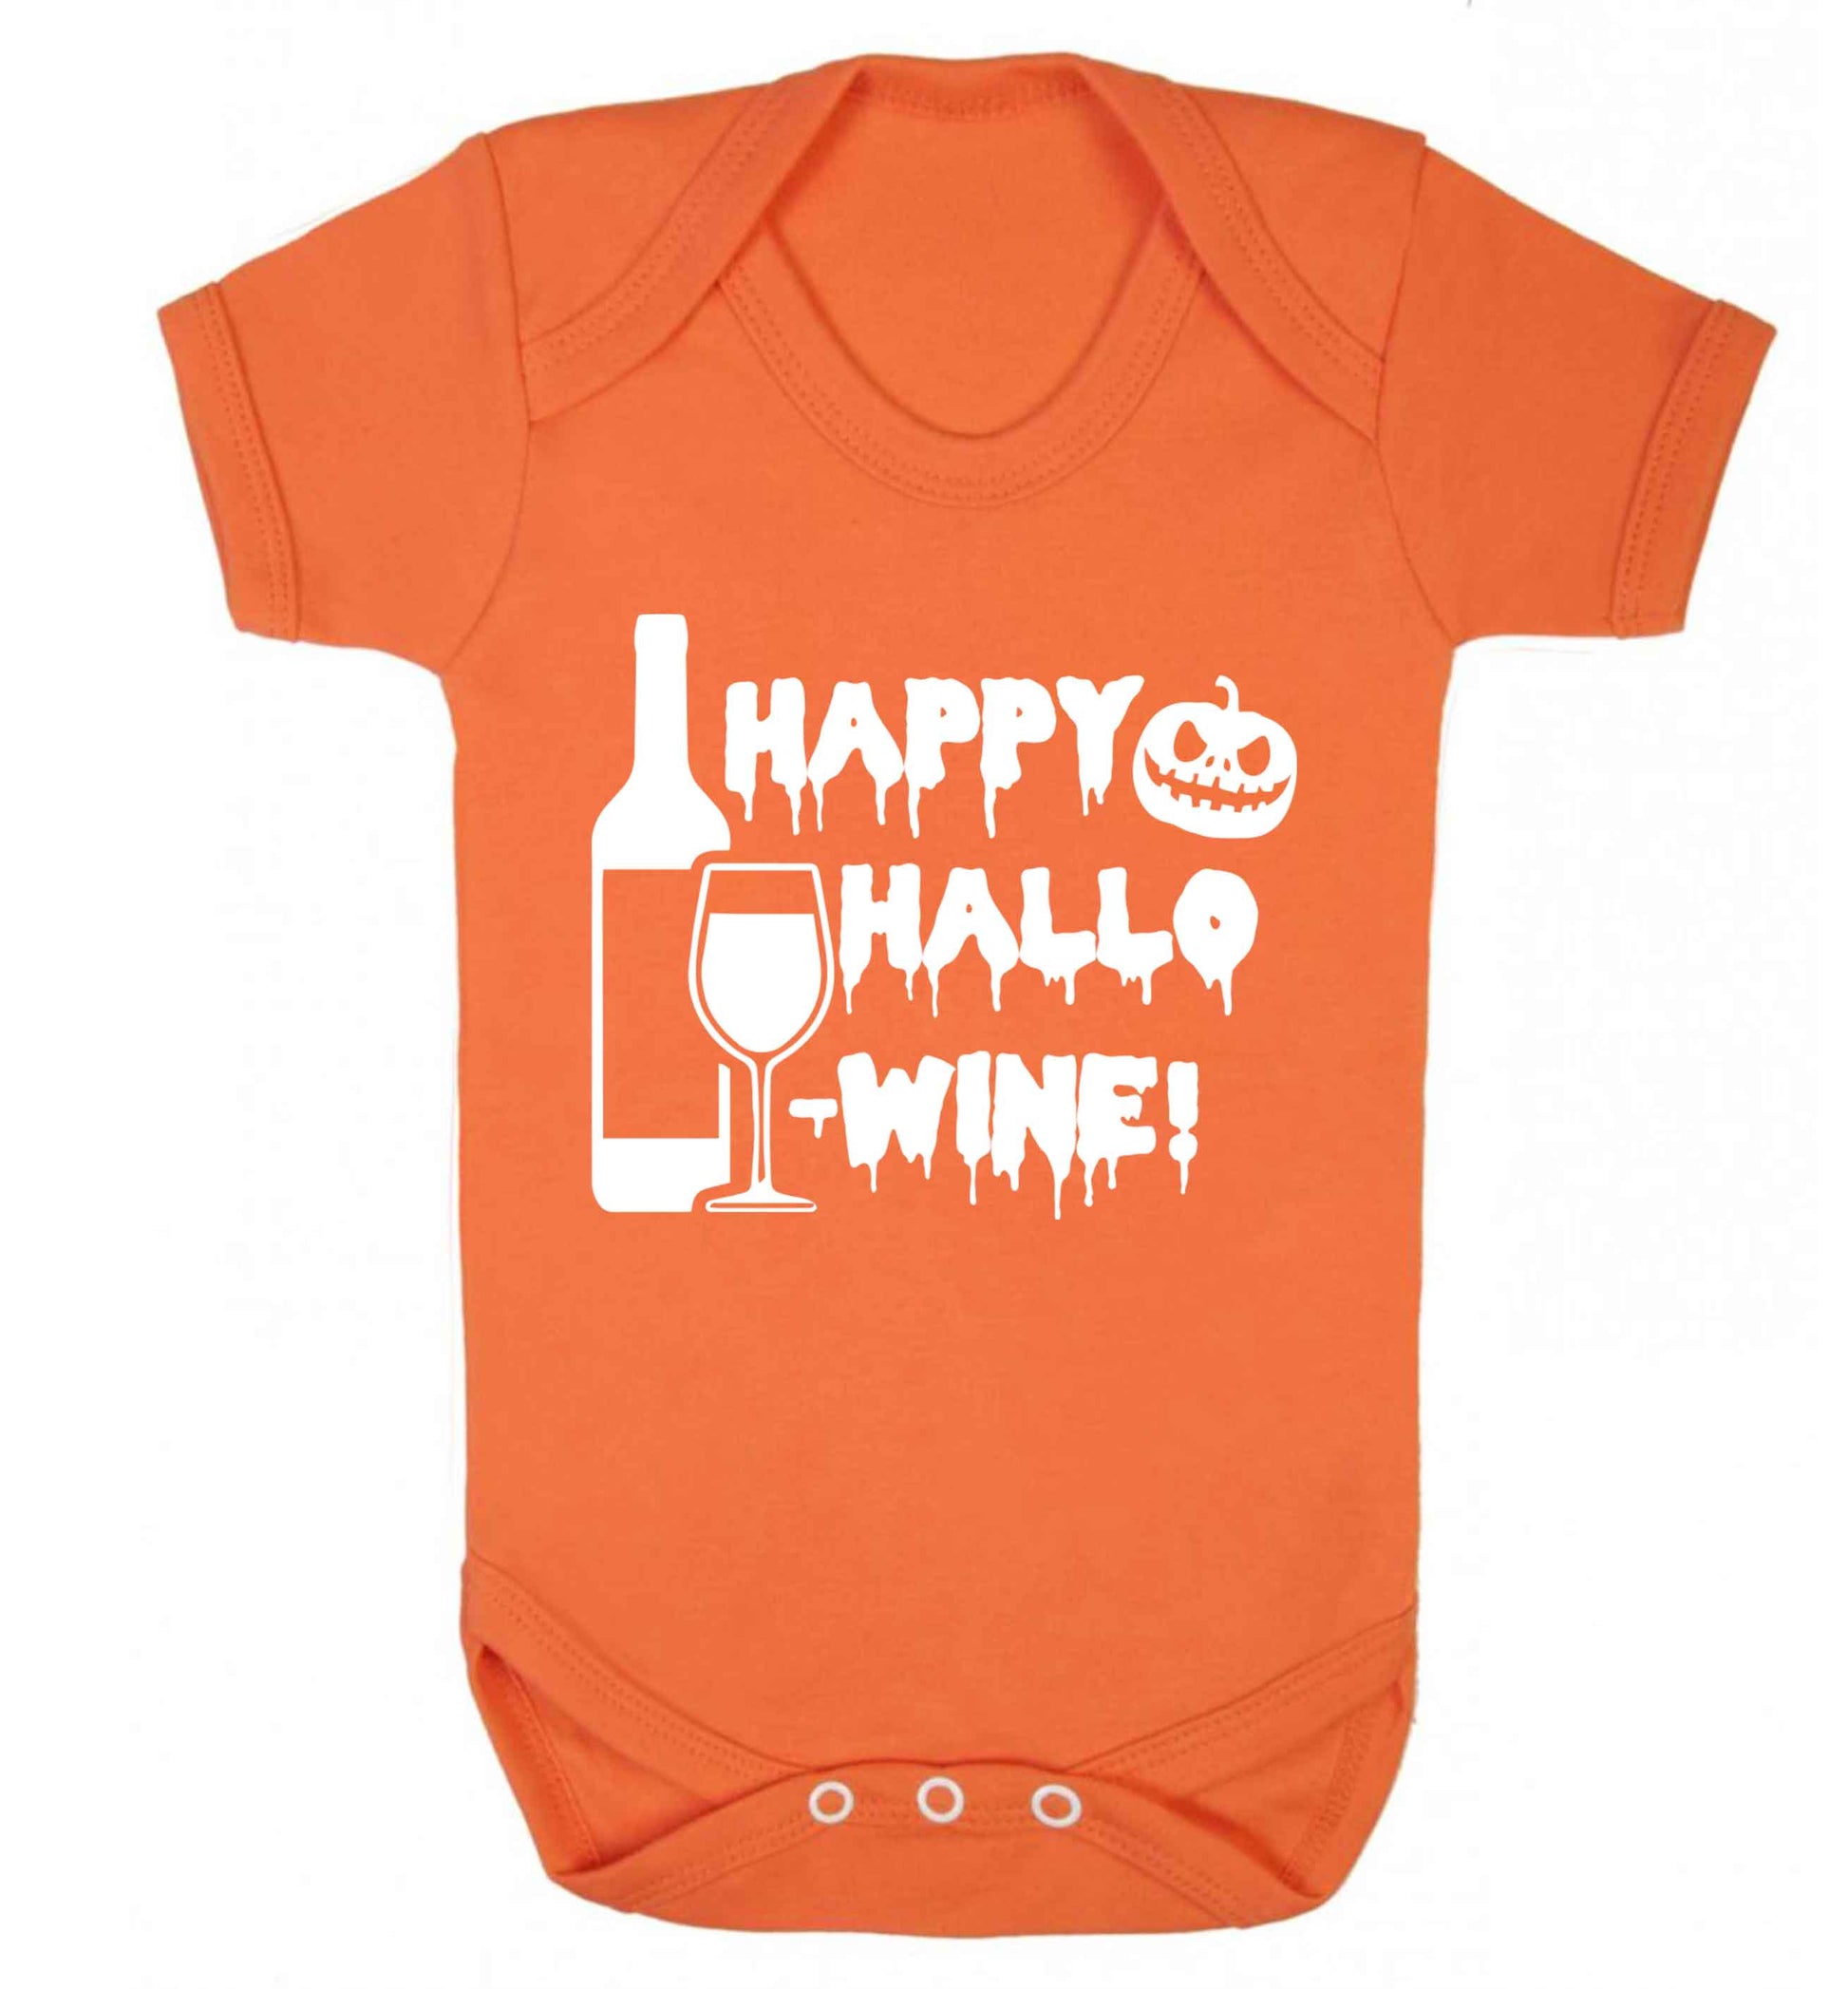 Happy hallow-wine Baby Vest orange 18-24 months